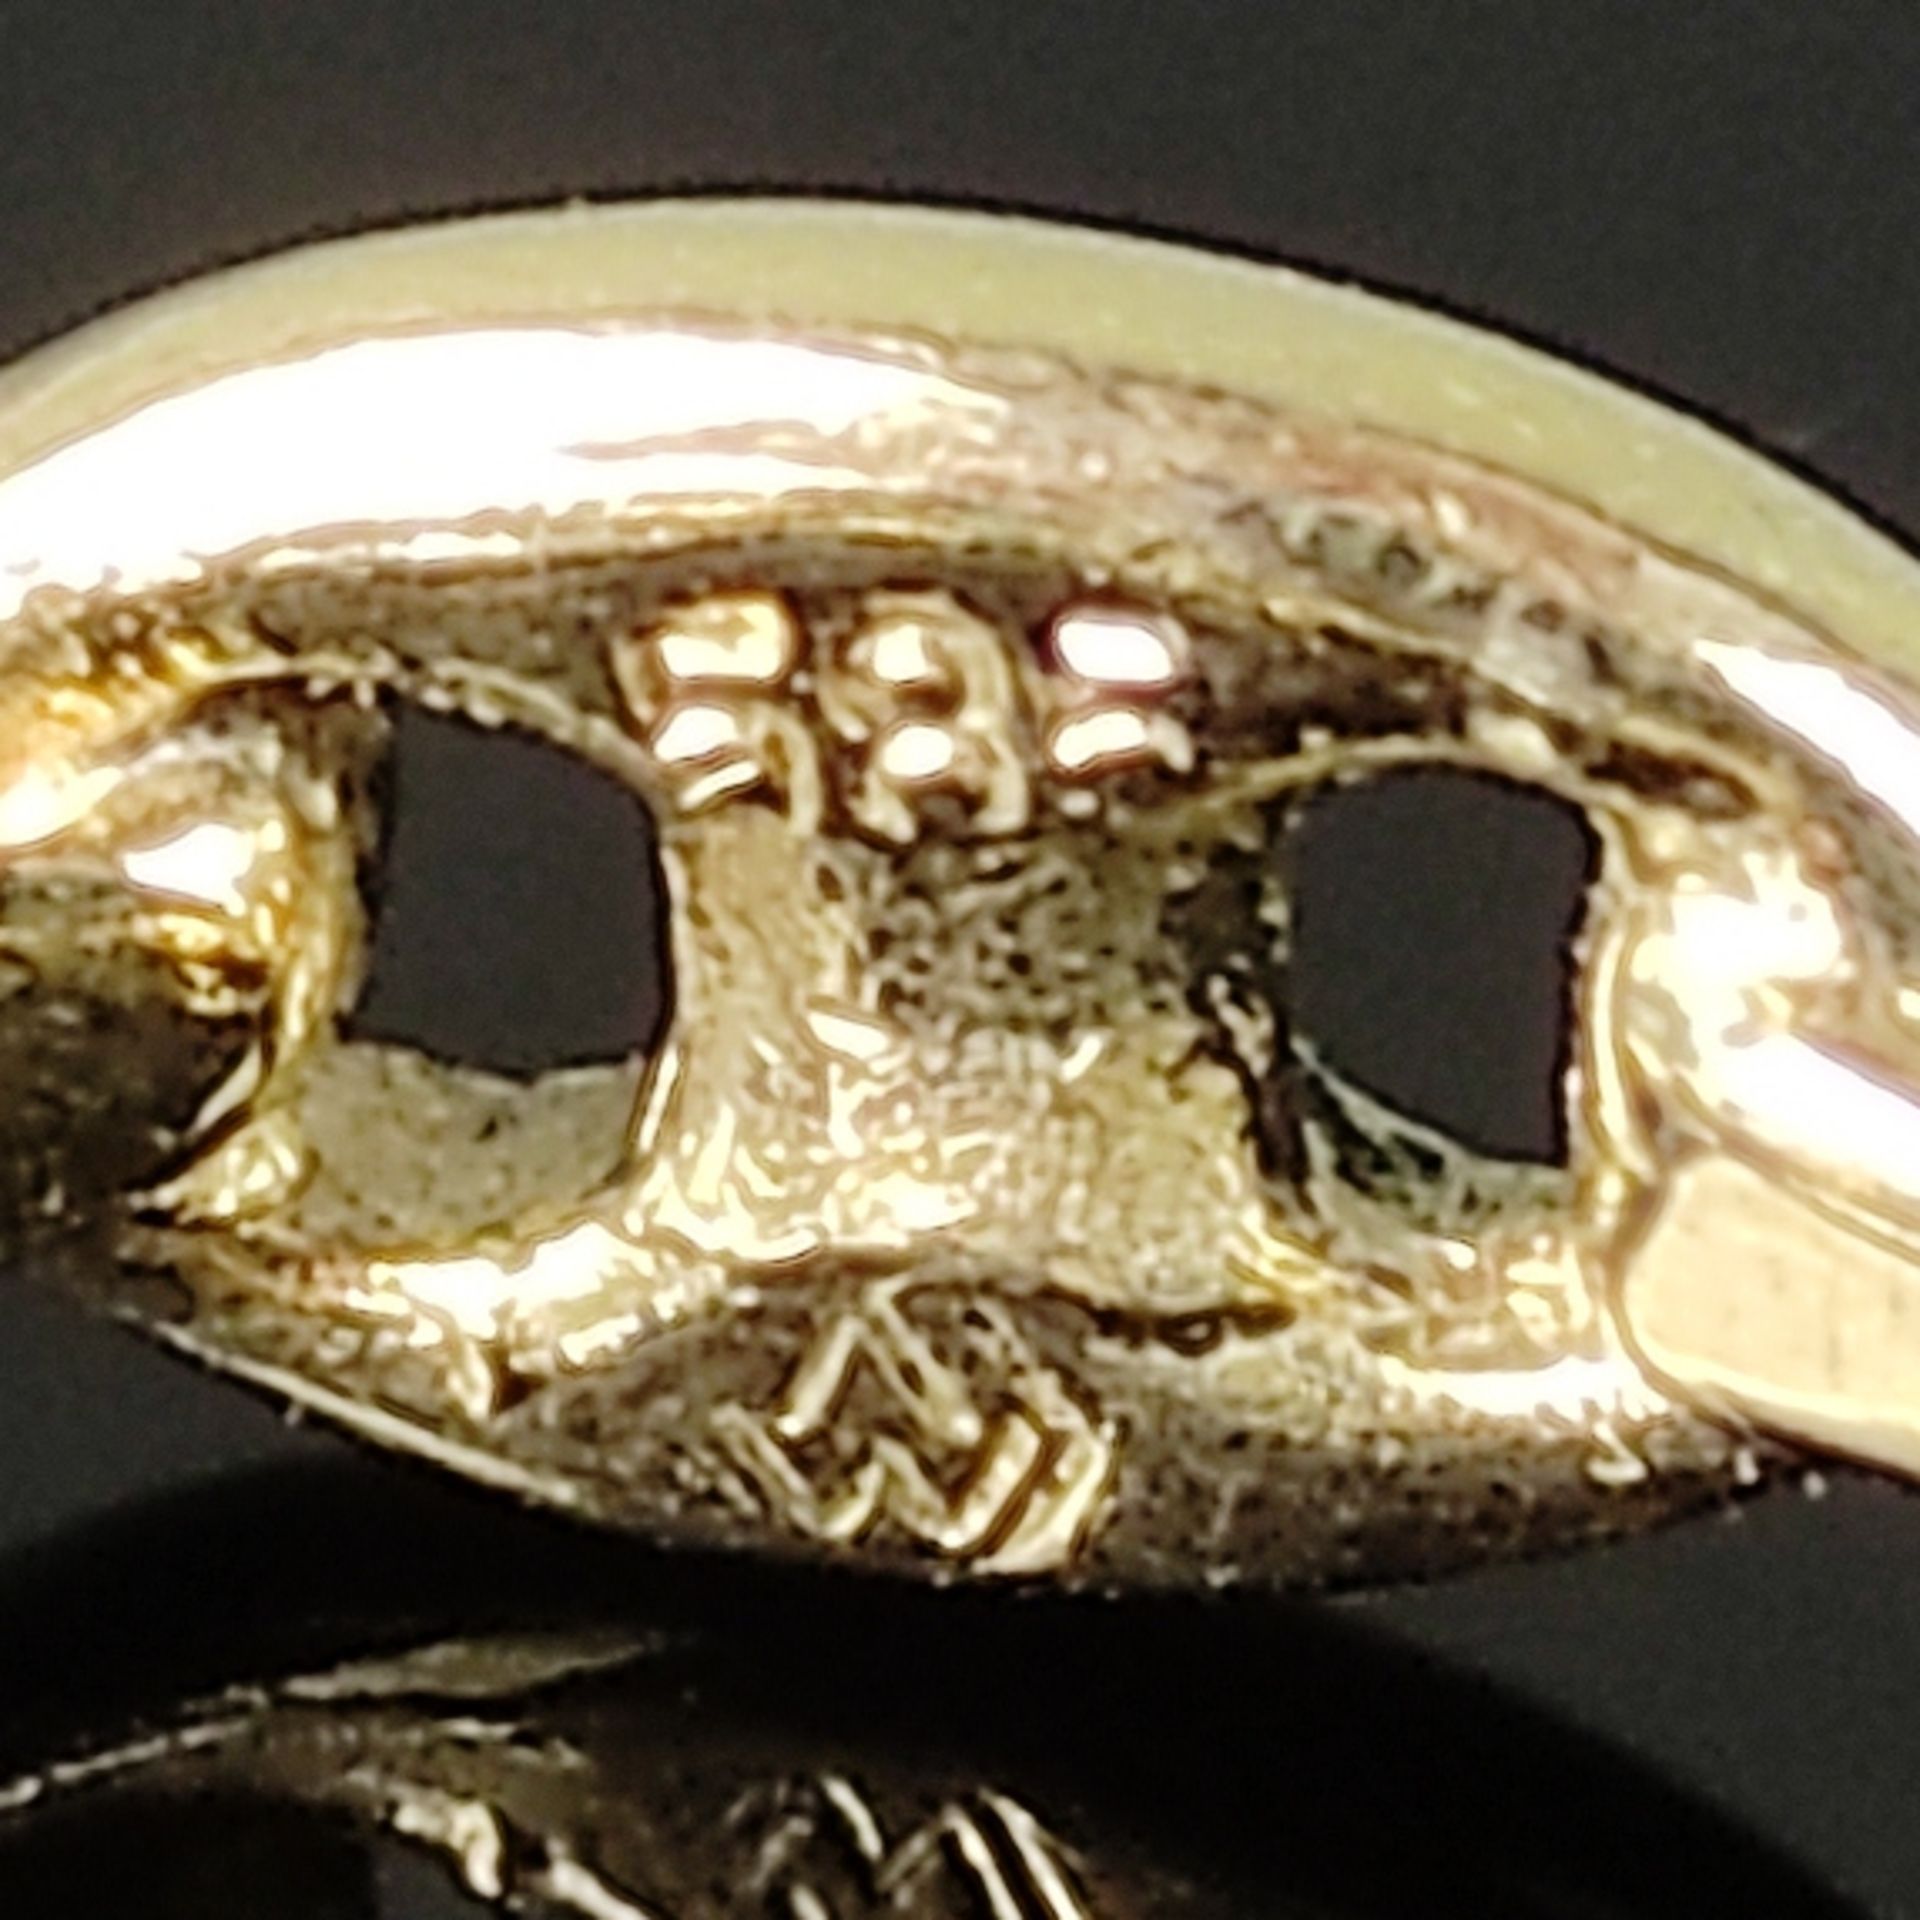 Schiffsanker- Ring, 585/14K Gelbgold (punziert), 3,7g, Ringgröße 54 - Bild 2 aus 2